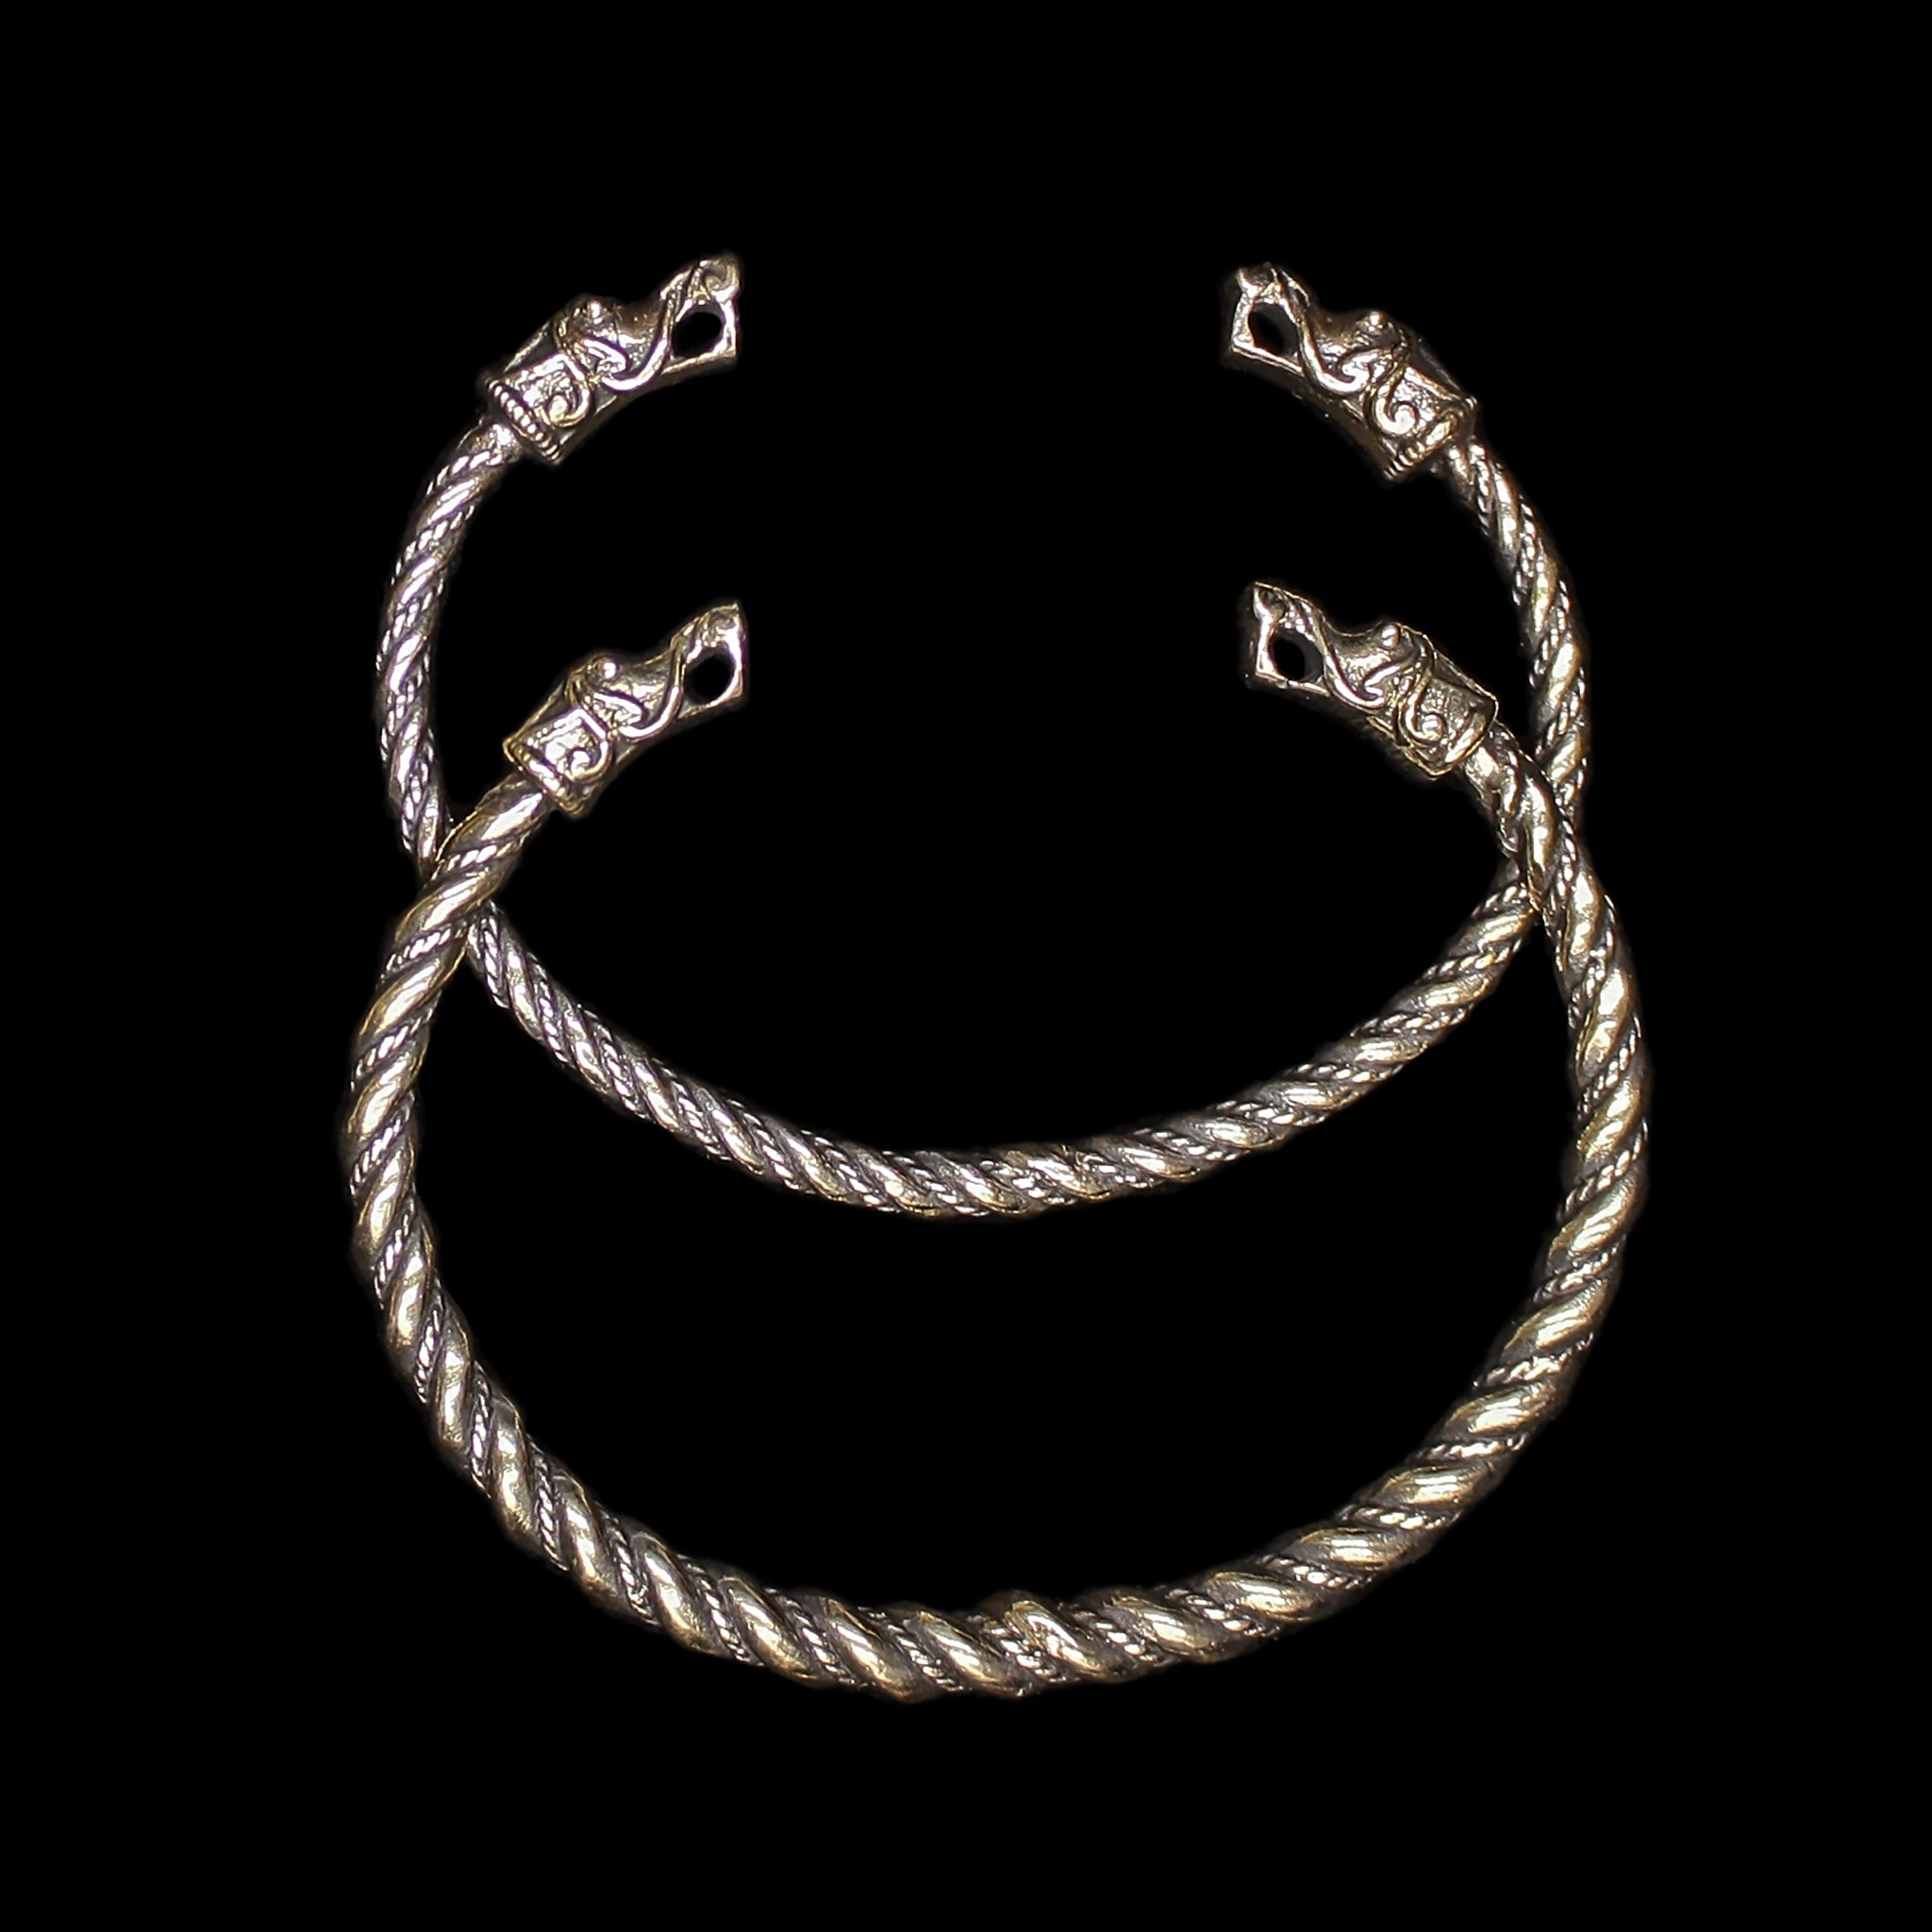 Twisted Bronze Bracelet sWith Gotlandic Dragon Heads